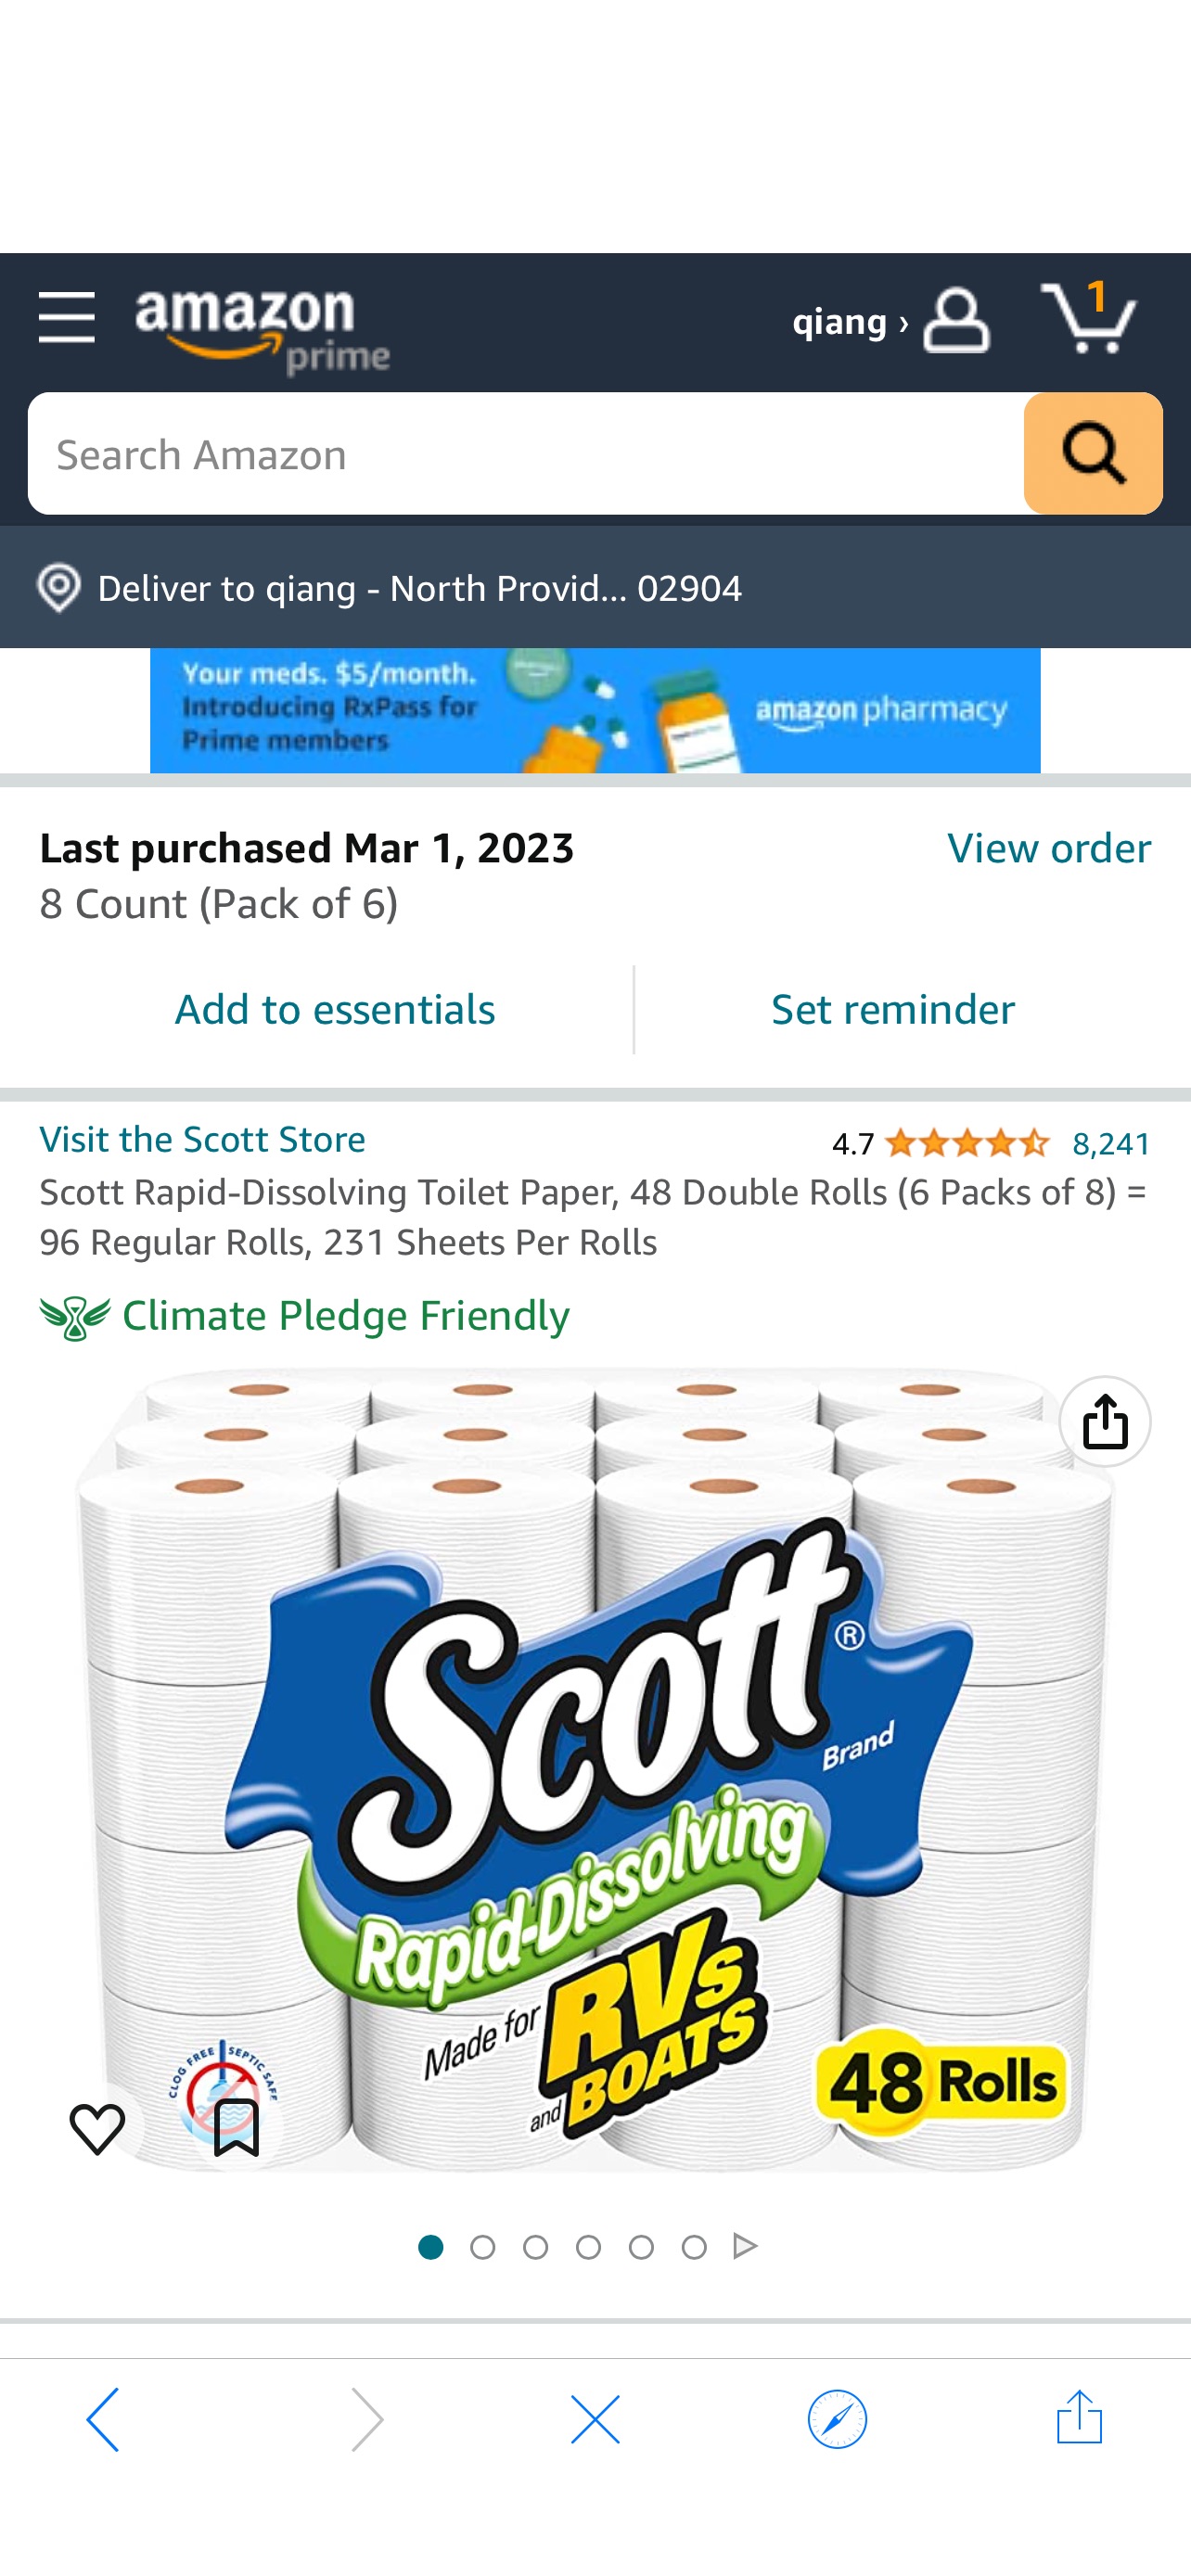 Amazon.com: Scott Rapid-Dissolving Toilet Paper, 48 Double Rolls (6 Packs of 8) = 96 Regular Rolls, 231 Sheets Per Rolls : Health & Household